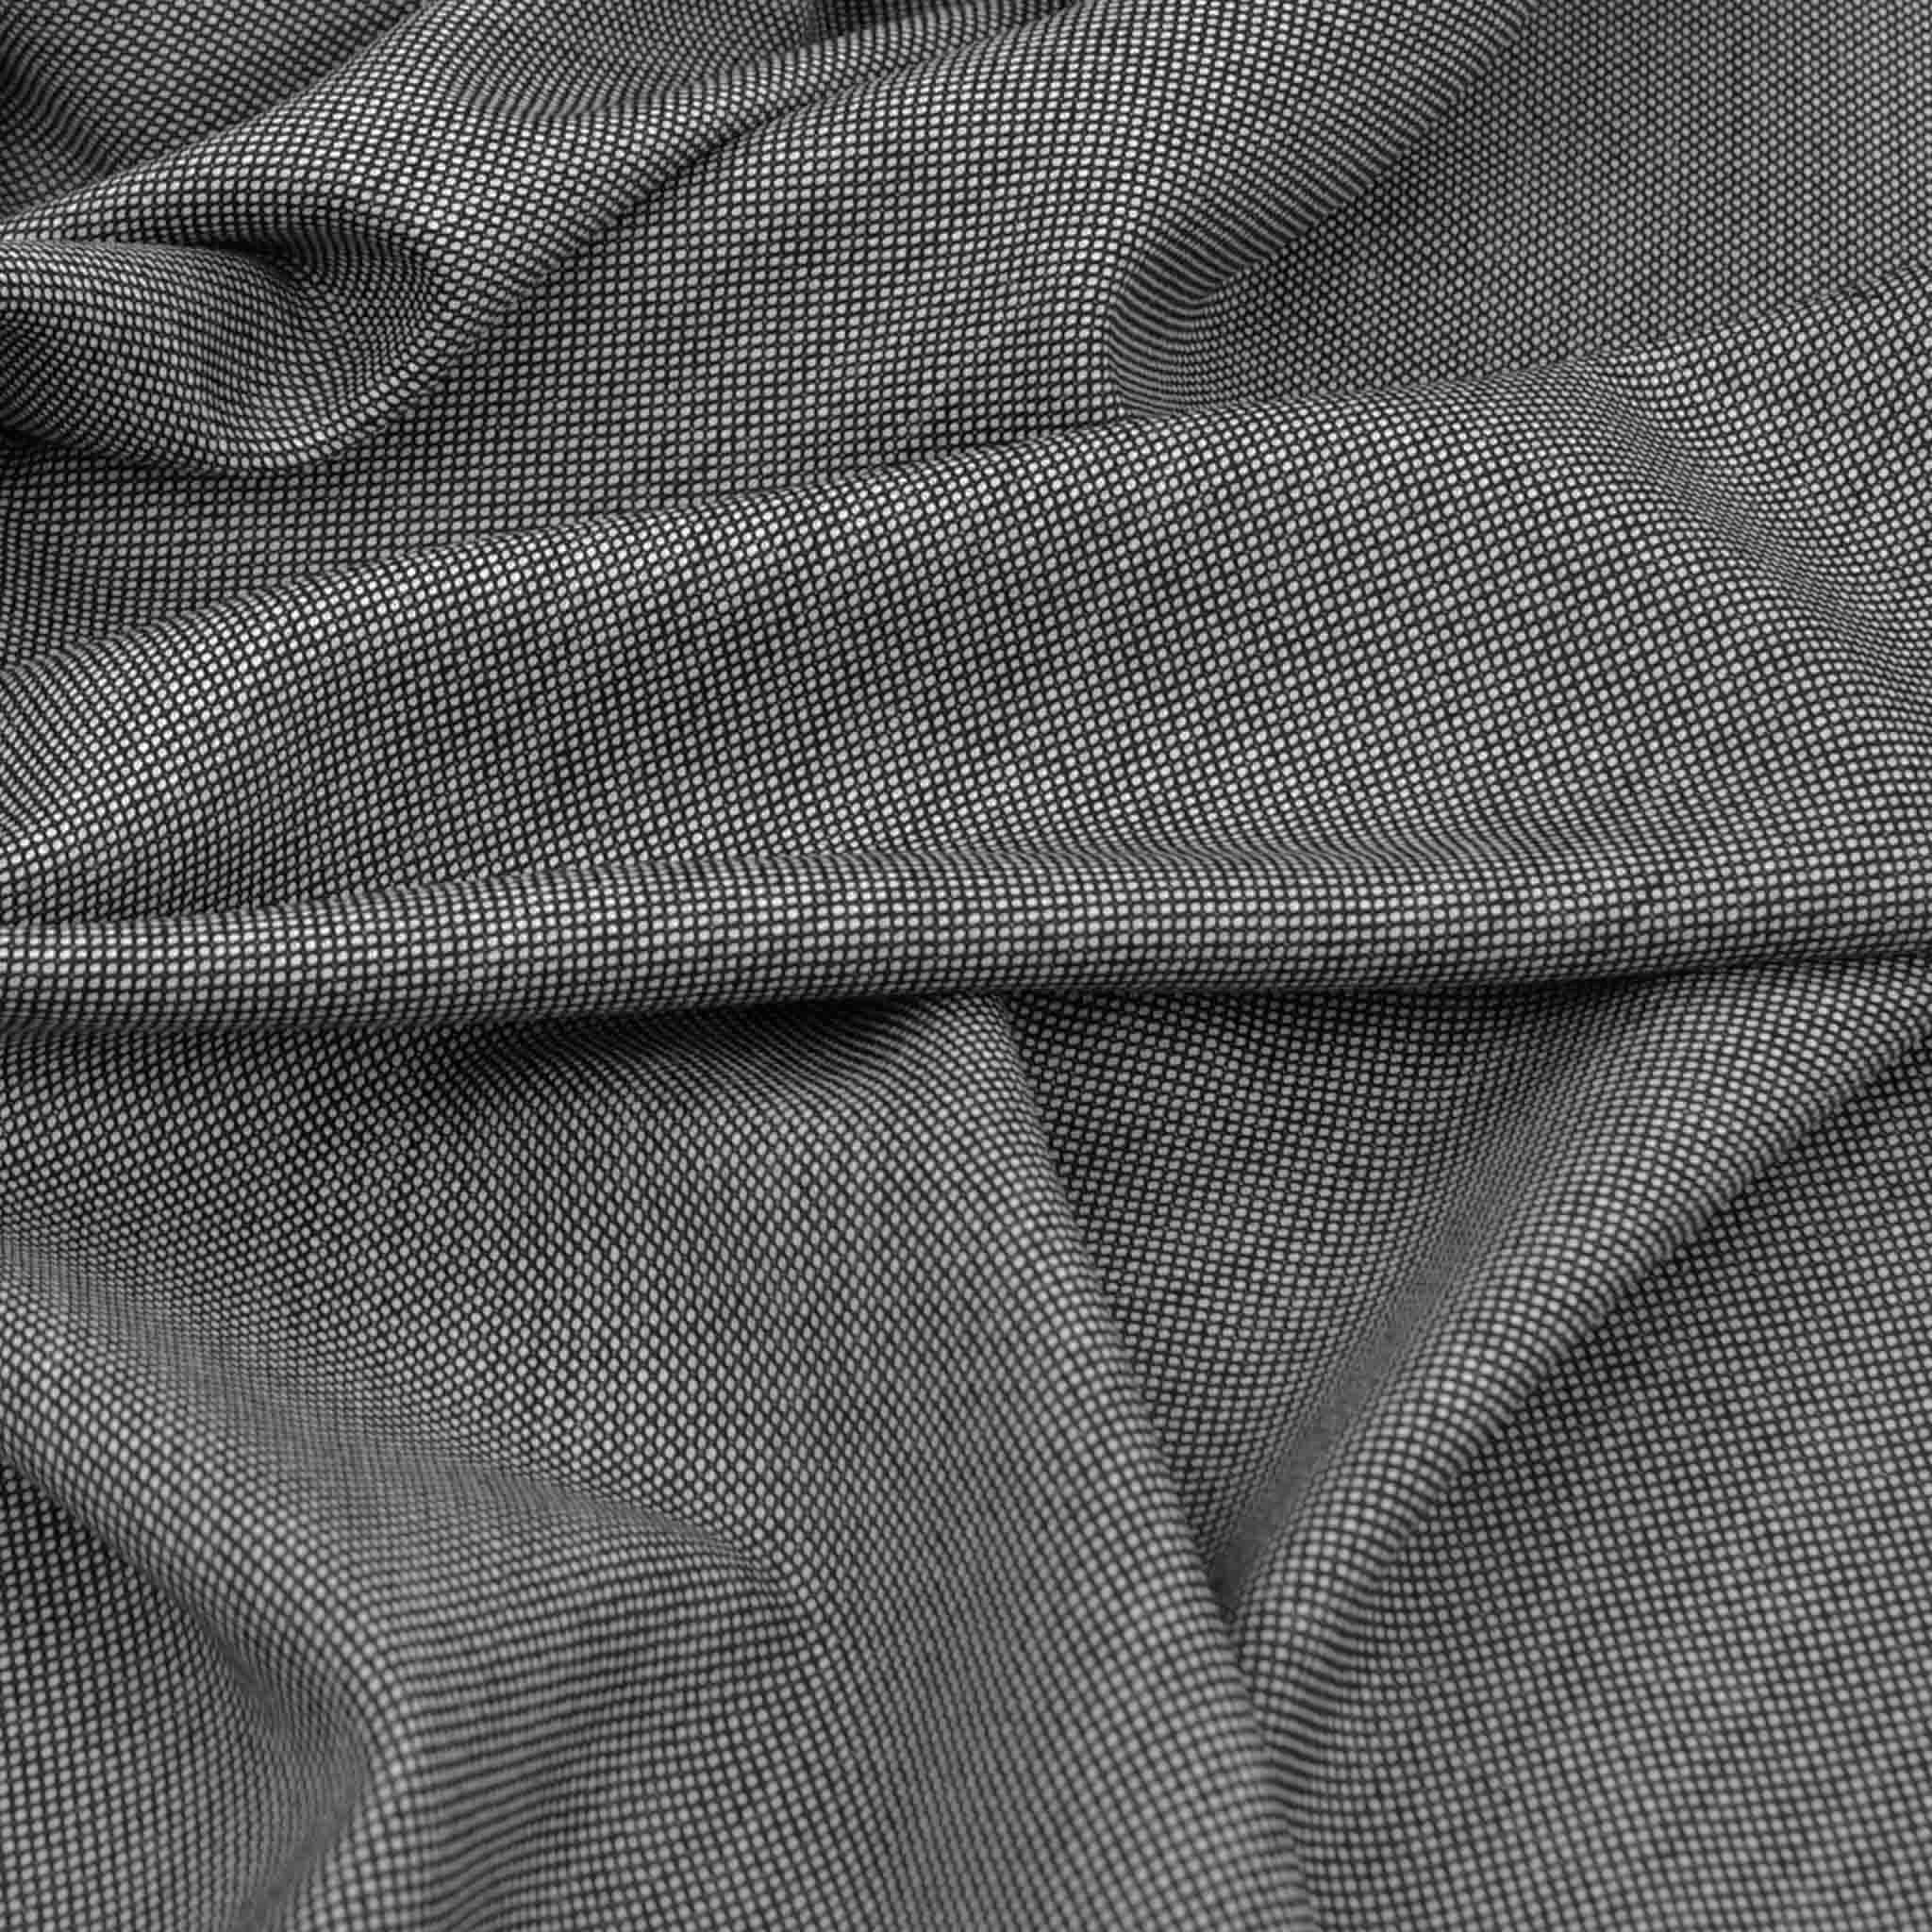 Black Micro-Motif Suiting Fabric 99513